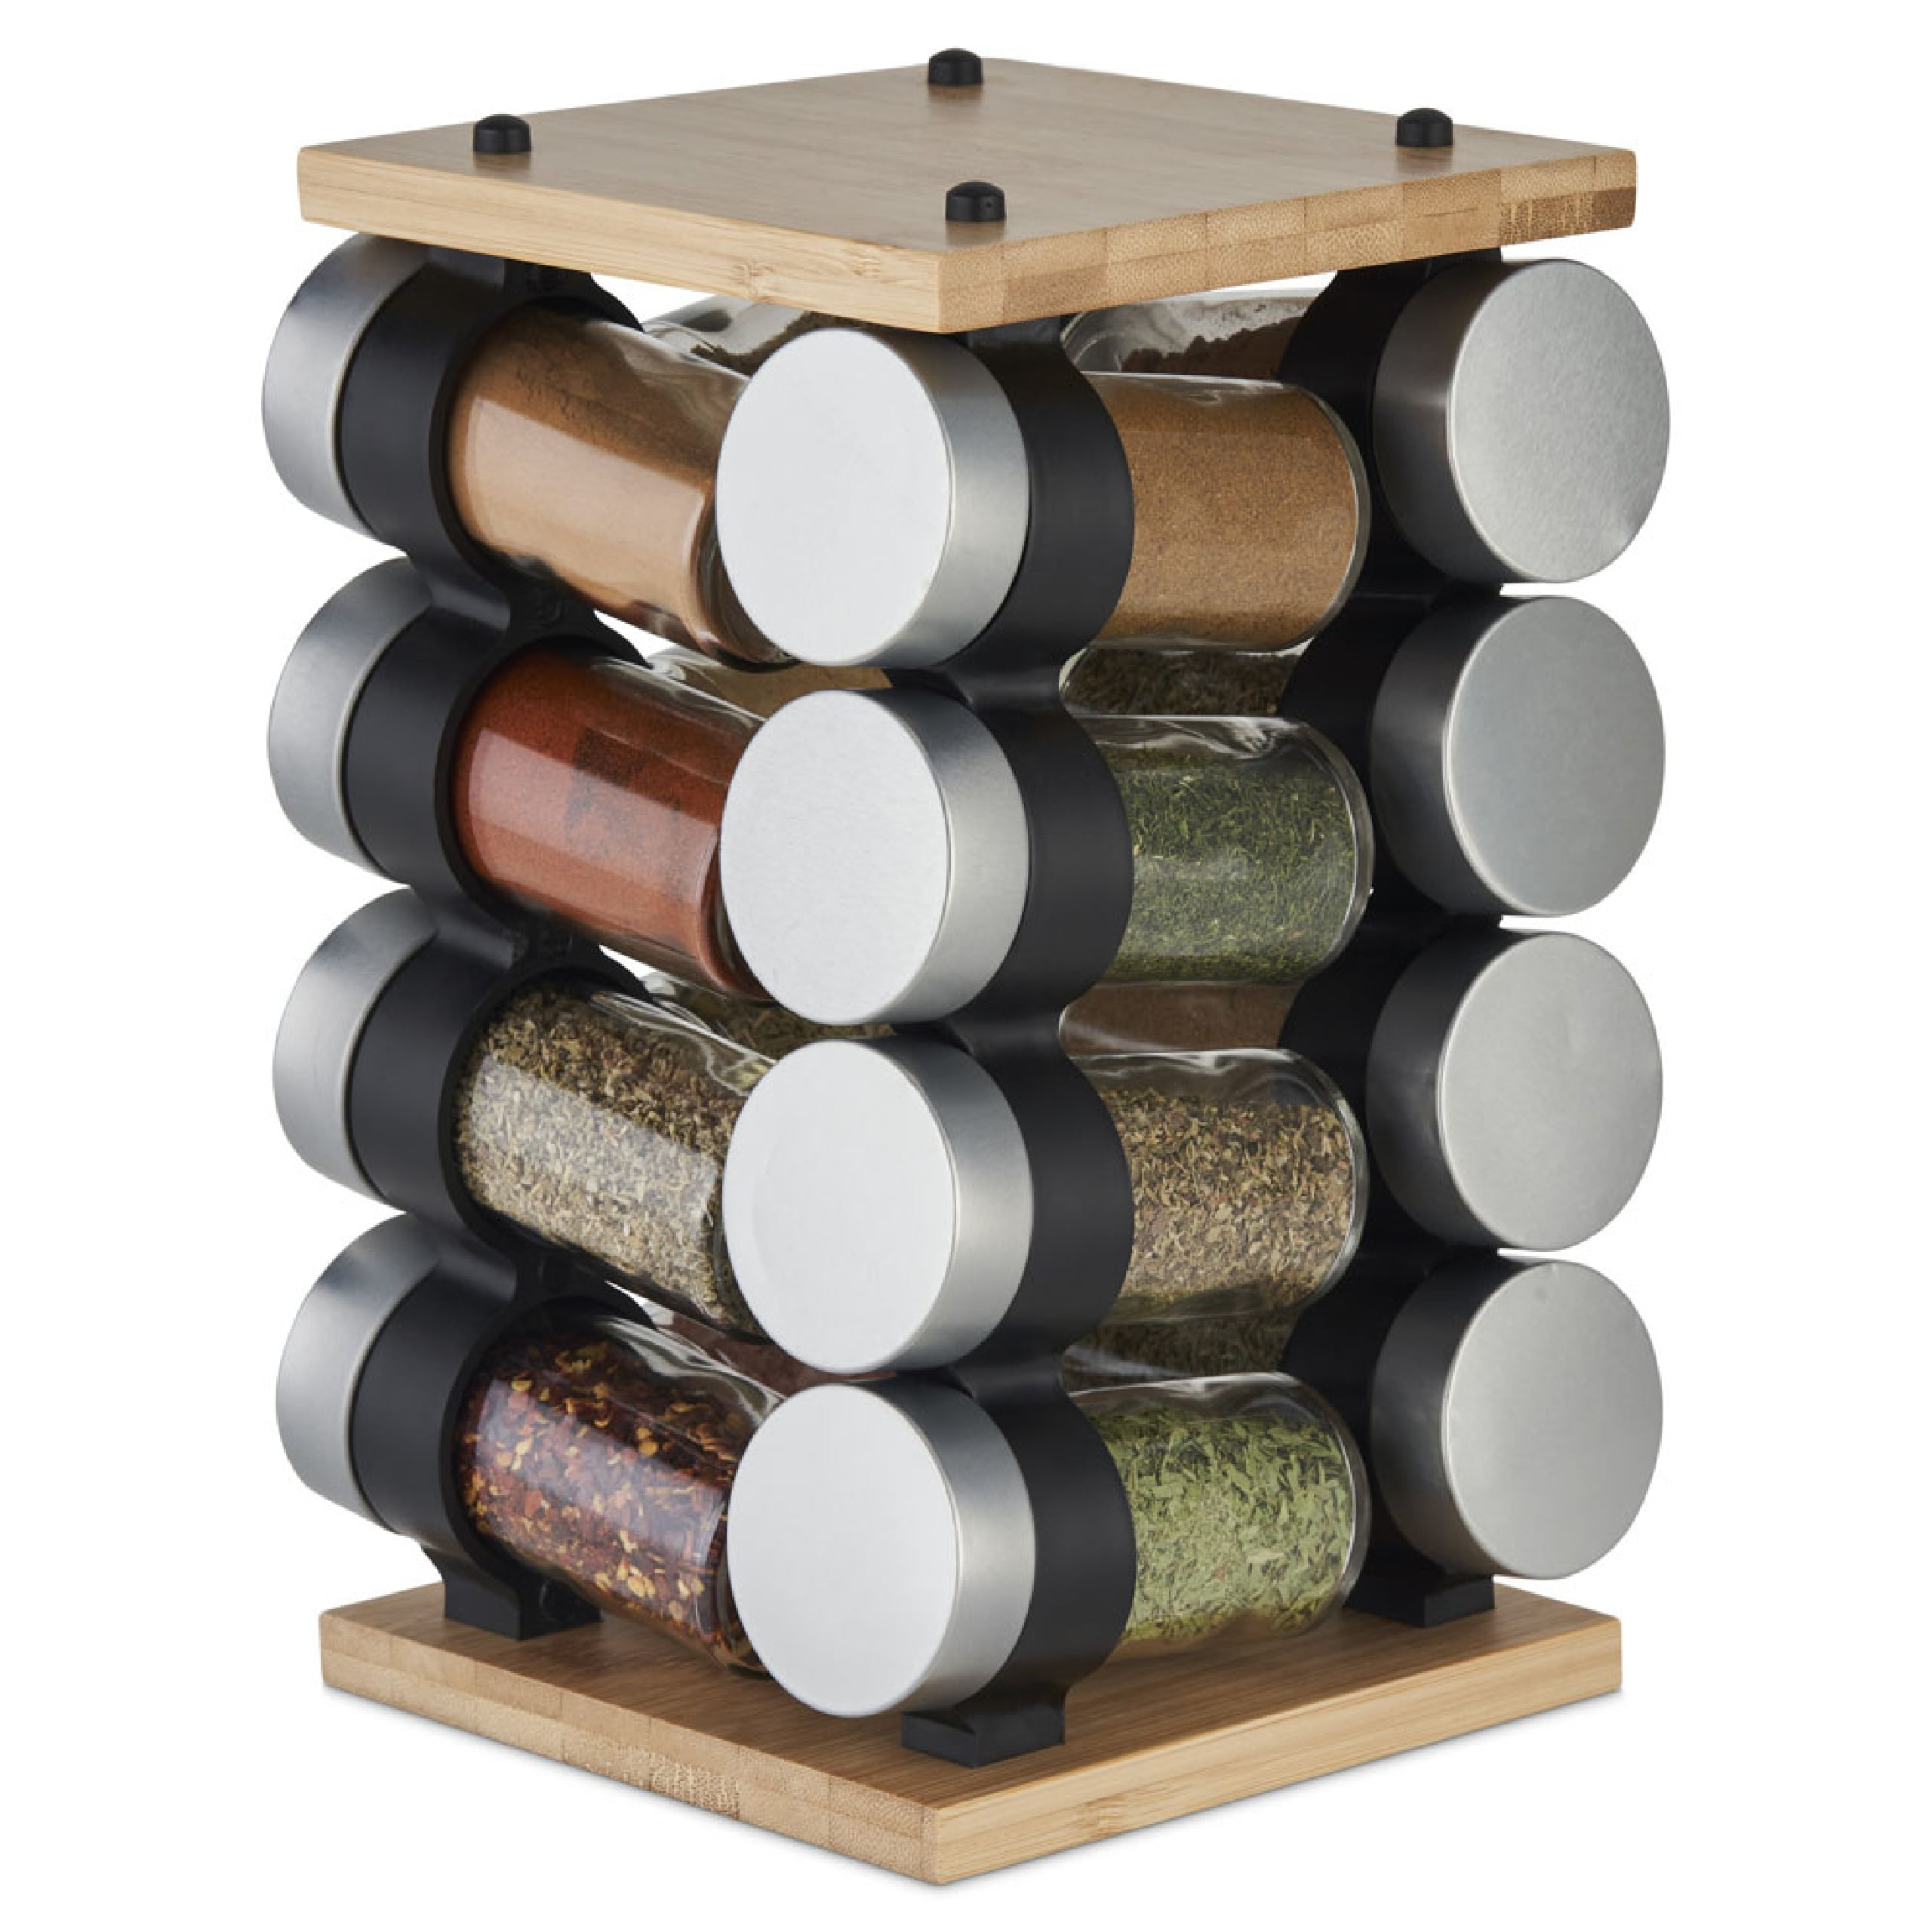 Bamboo Spice Drawer Organizer | Crate & Barrel